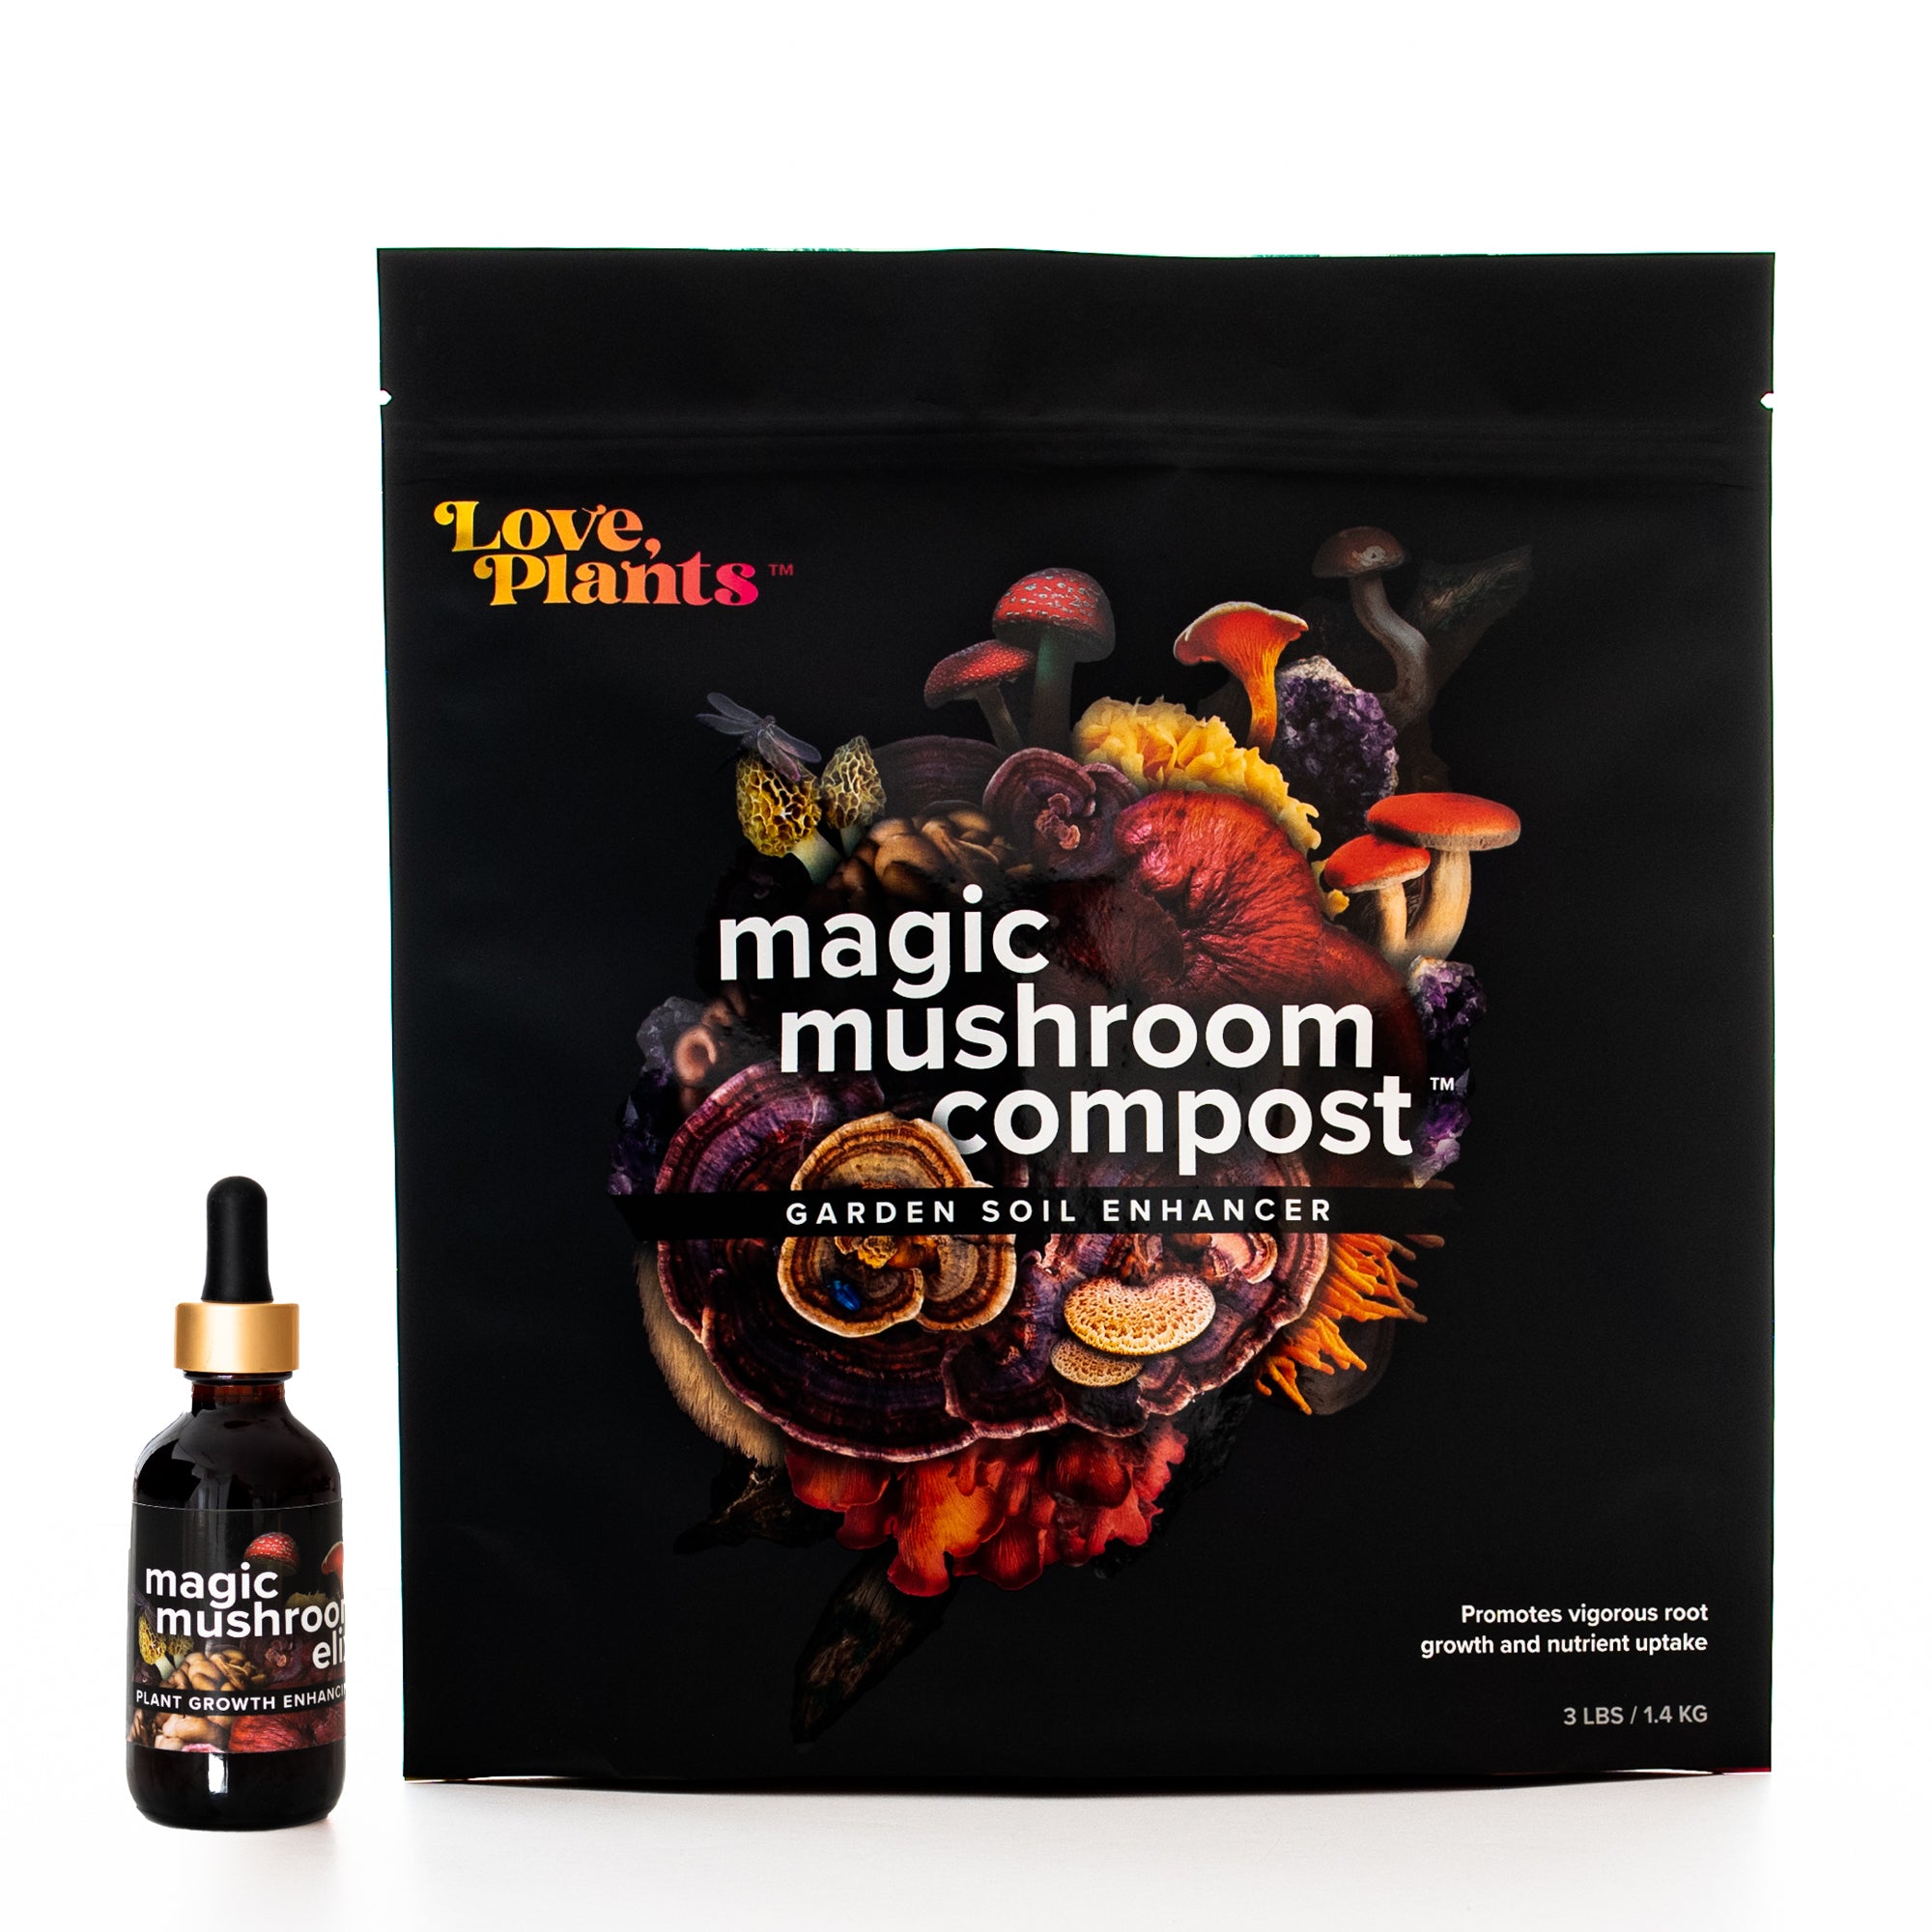 Product images of Magic Mushroom compost bag and Magic Mushroom Elixir dropper bottle